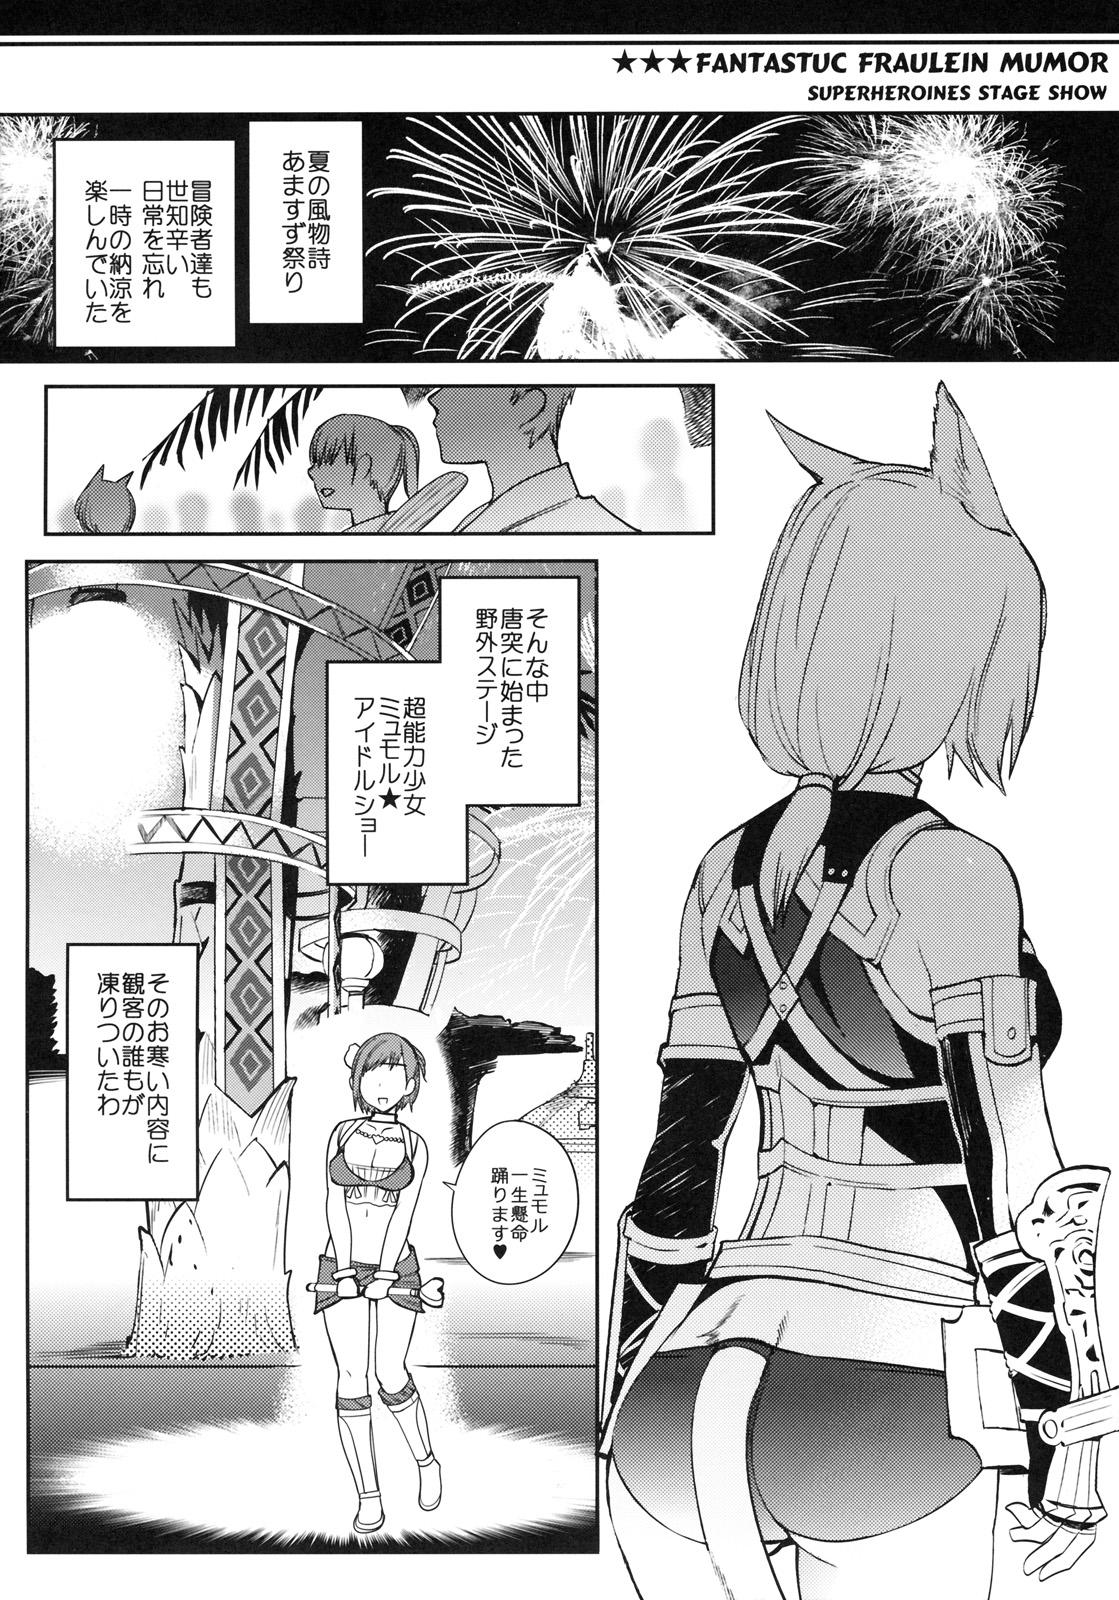 Super Fraulein Amasuzu - Final fantasy xi Workout - Page 5